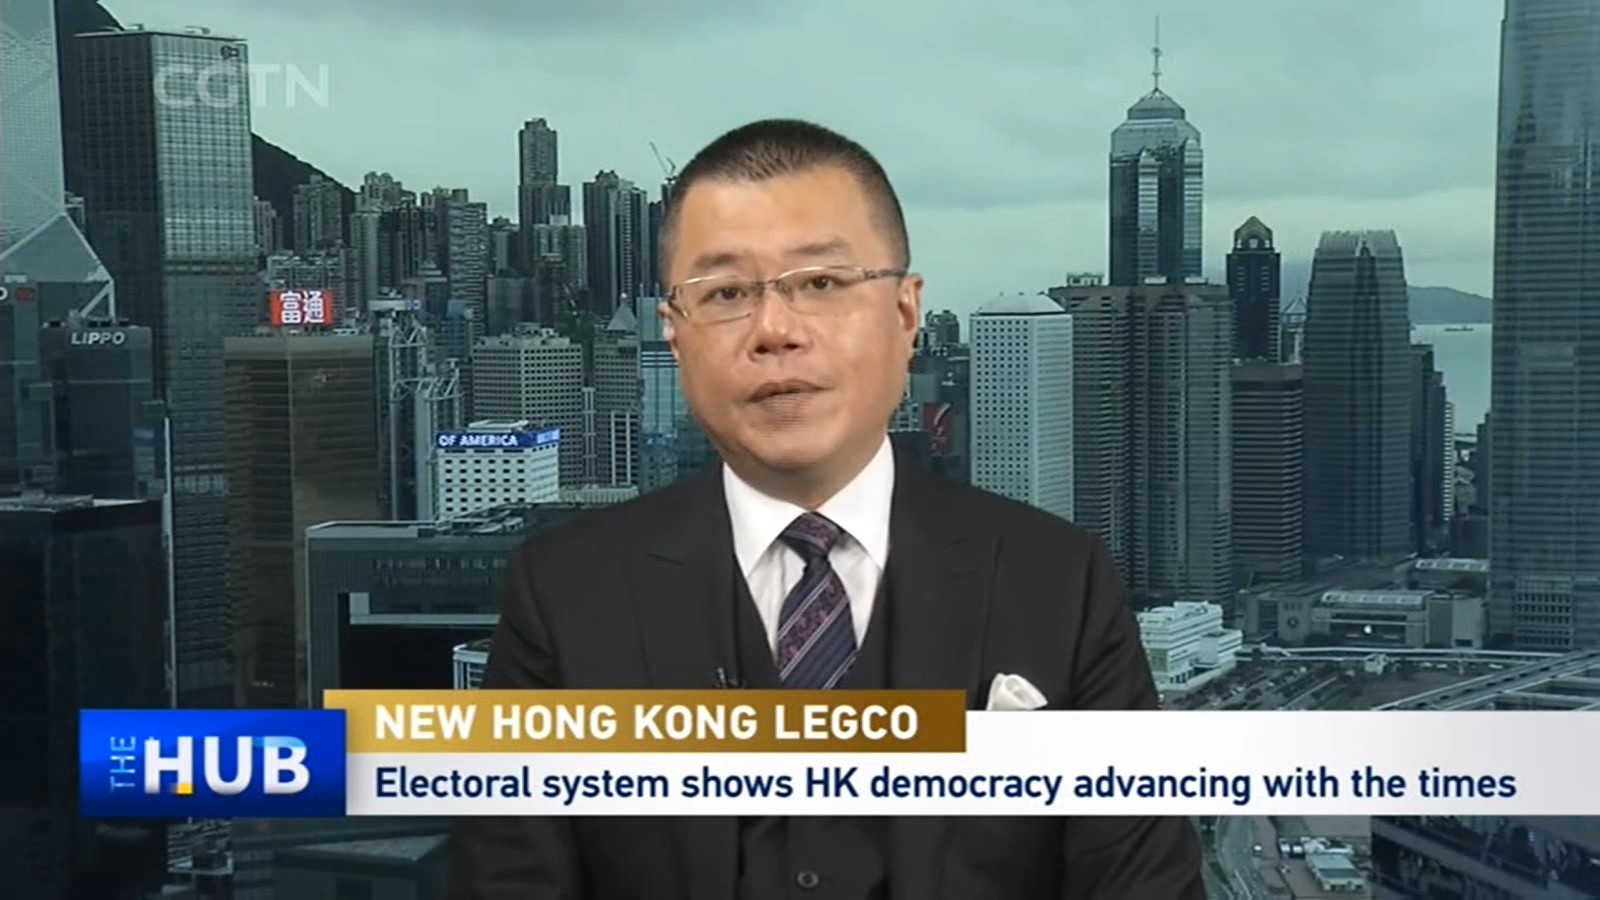 New Hong Kong Legco